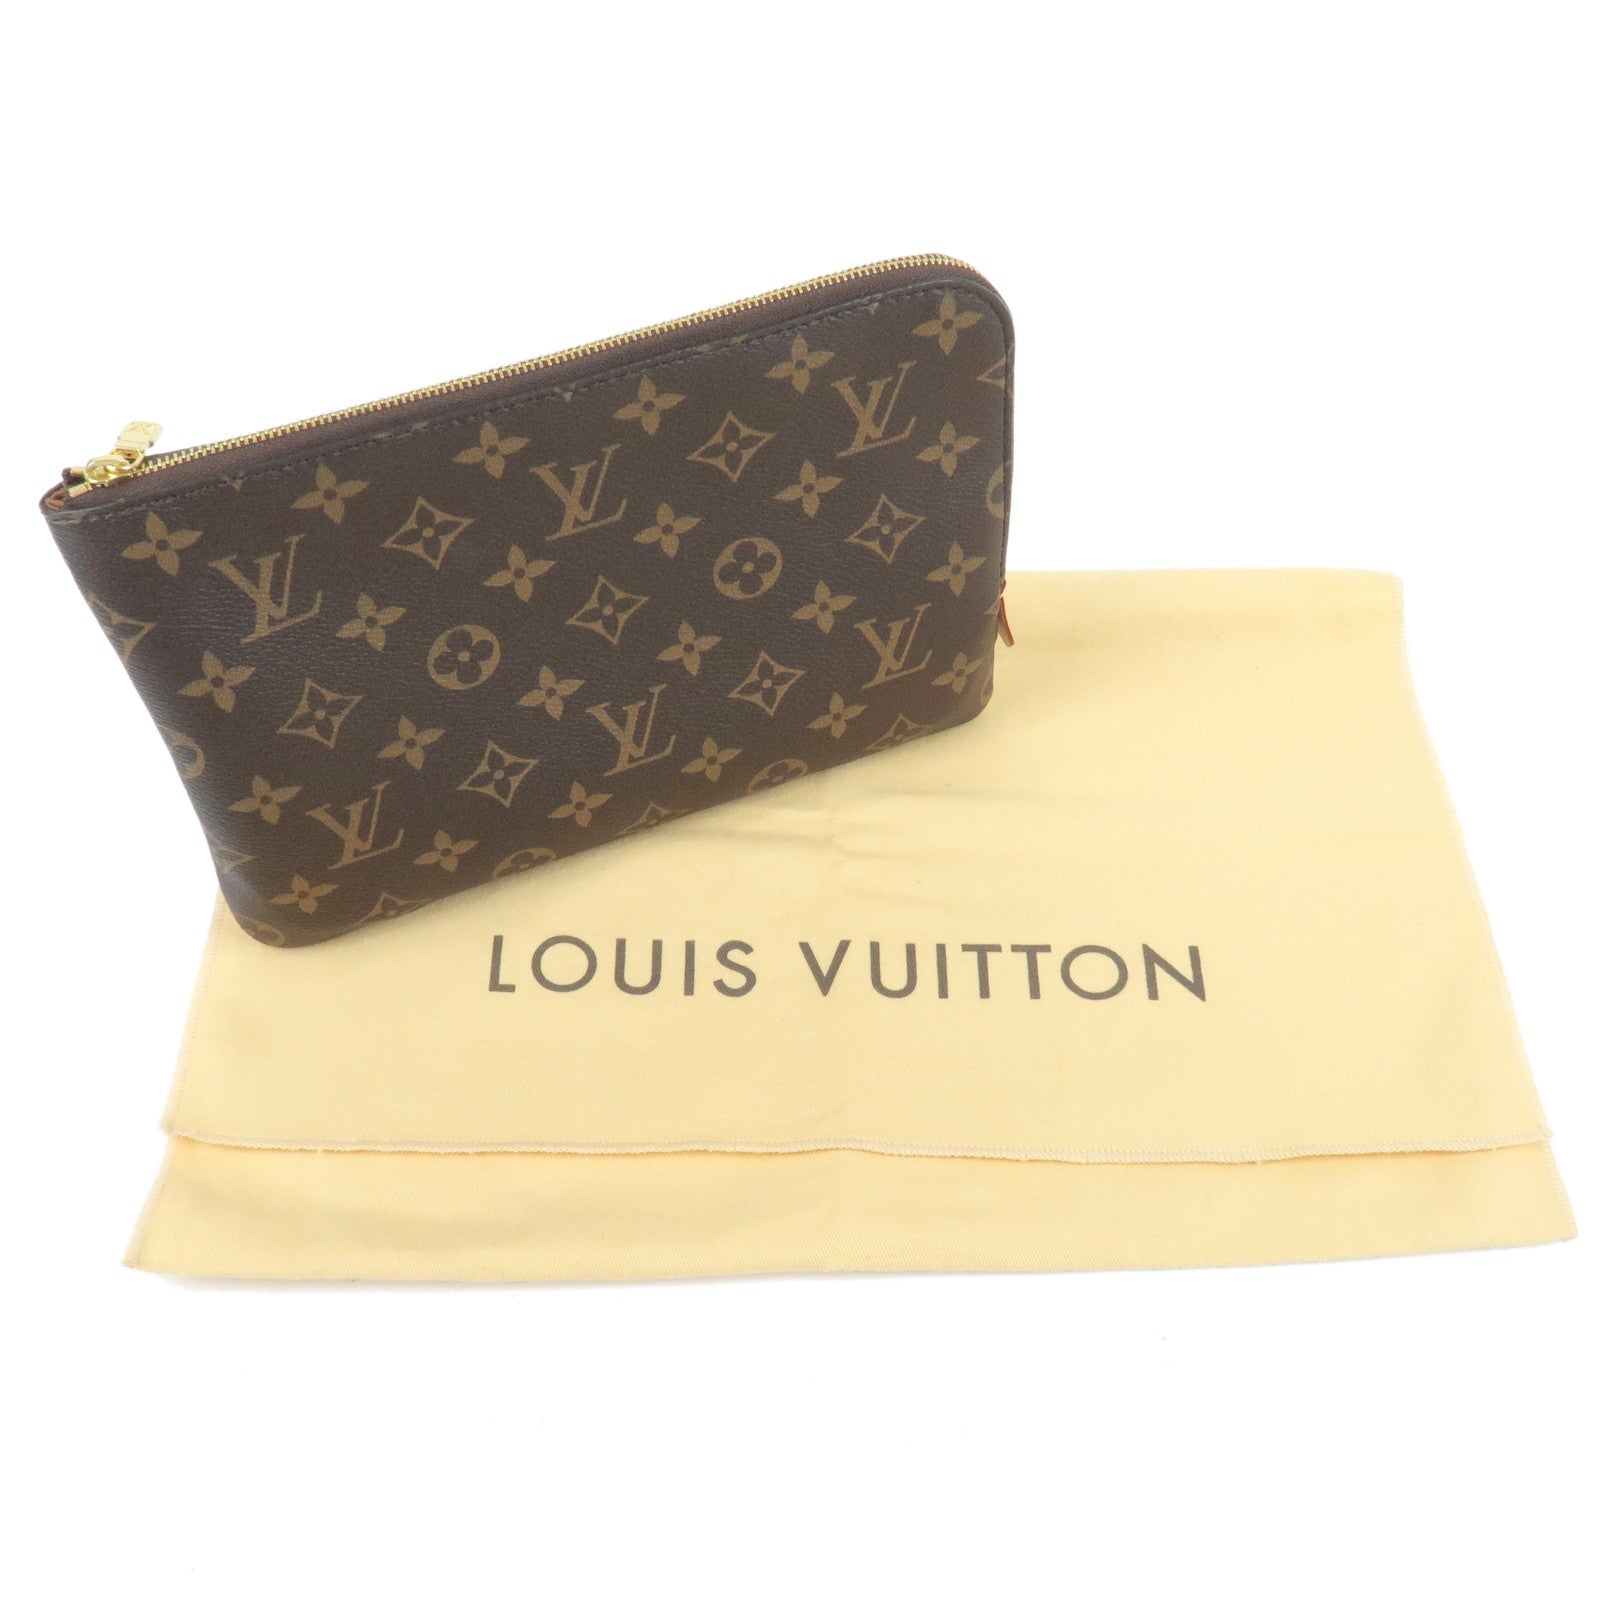 Louis Vuitton Etui Voyage PM Review + What fits 